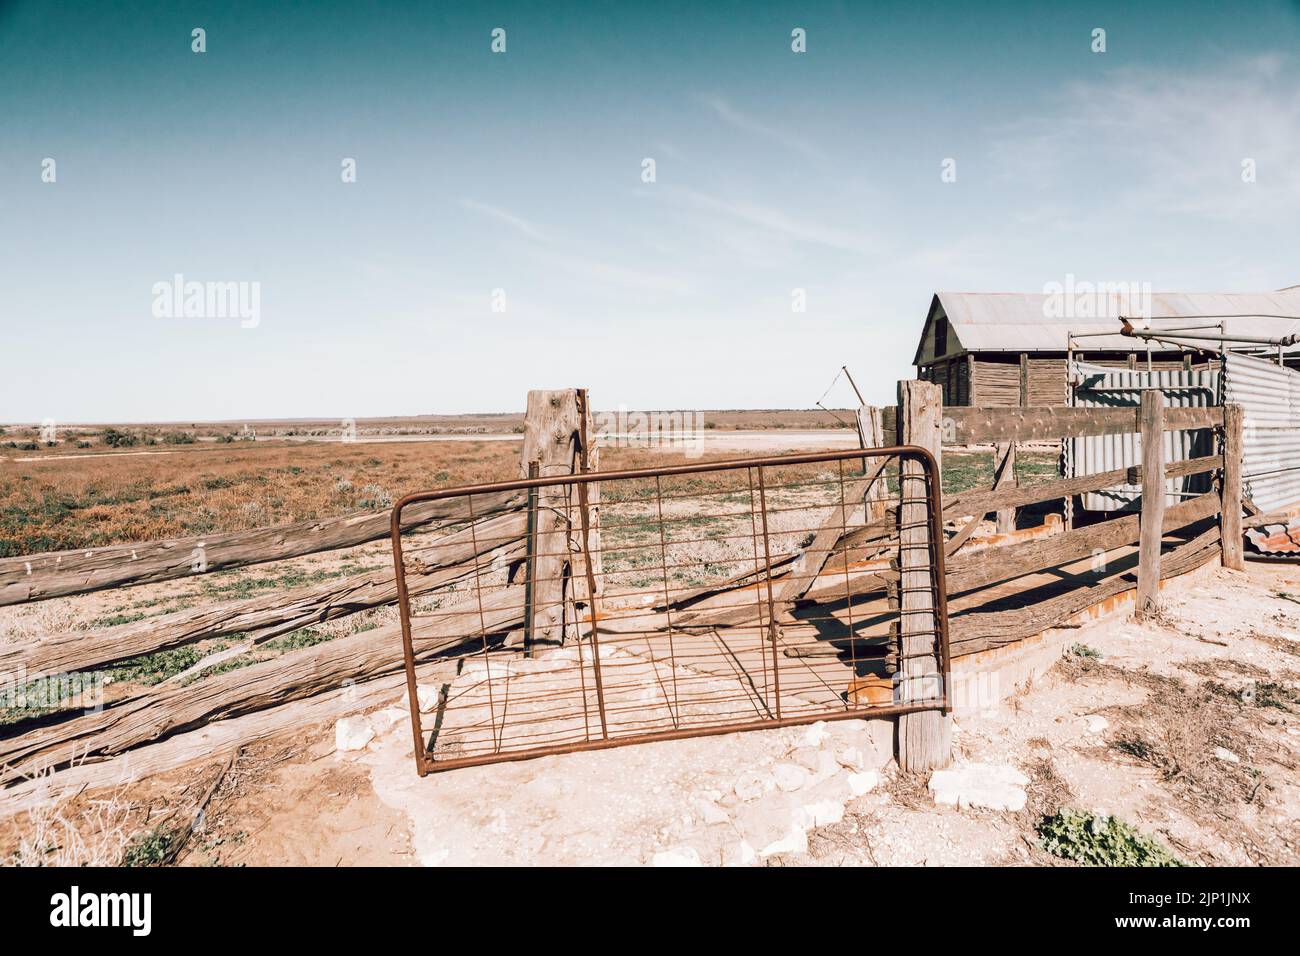 Farm buildings on the desert scrub plains Stock Photo